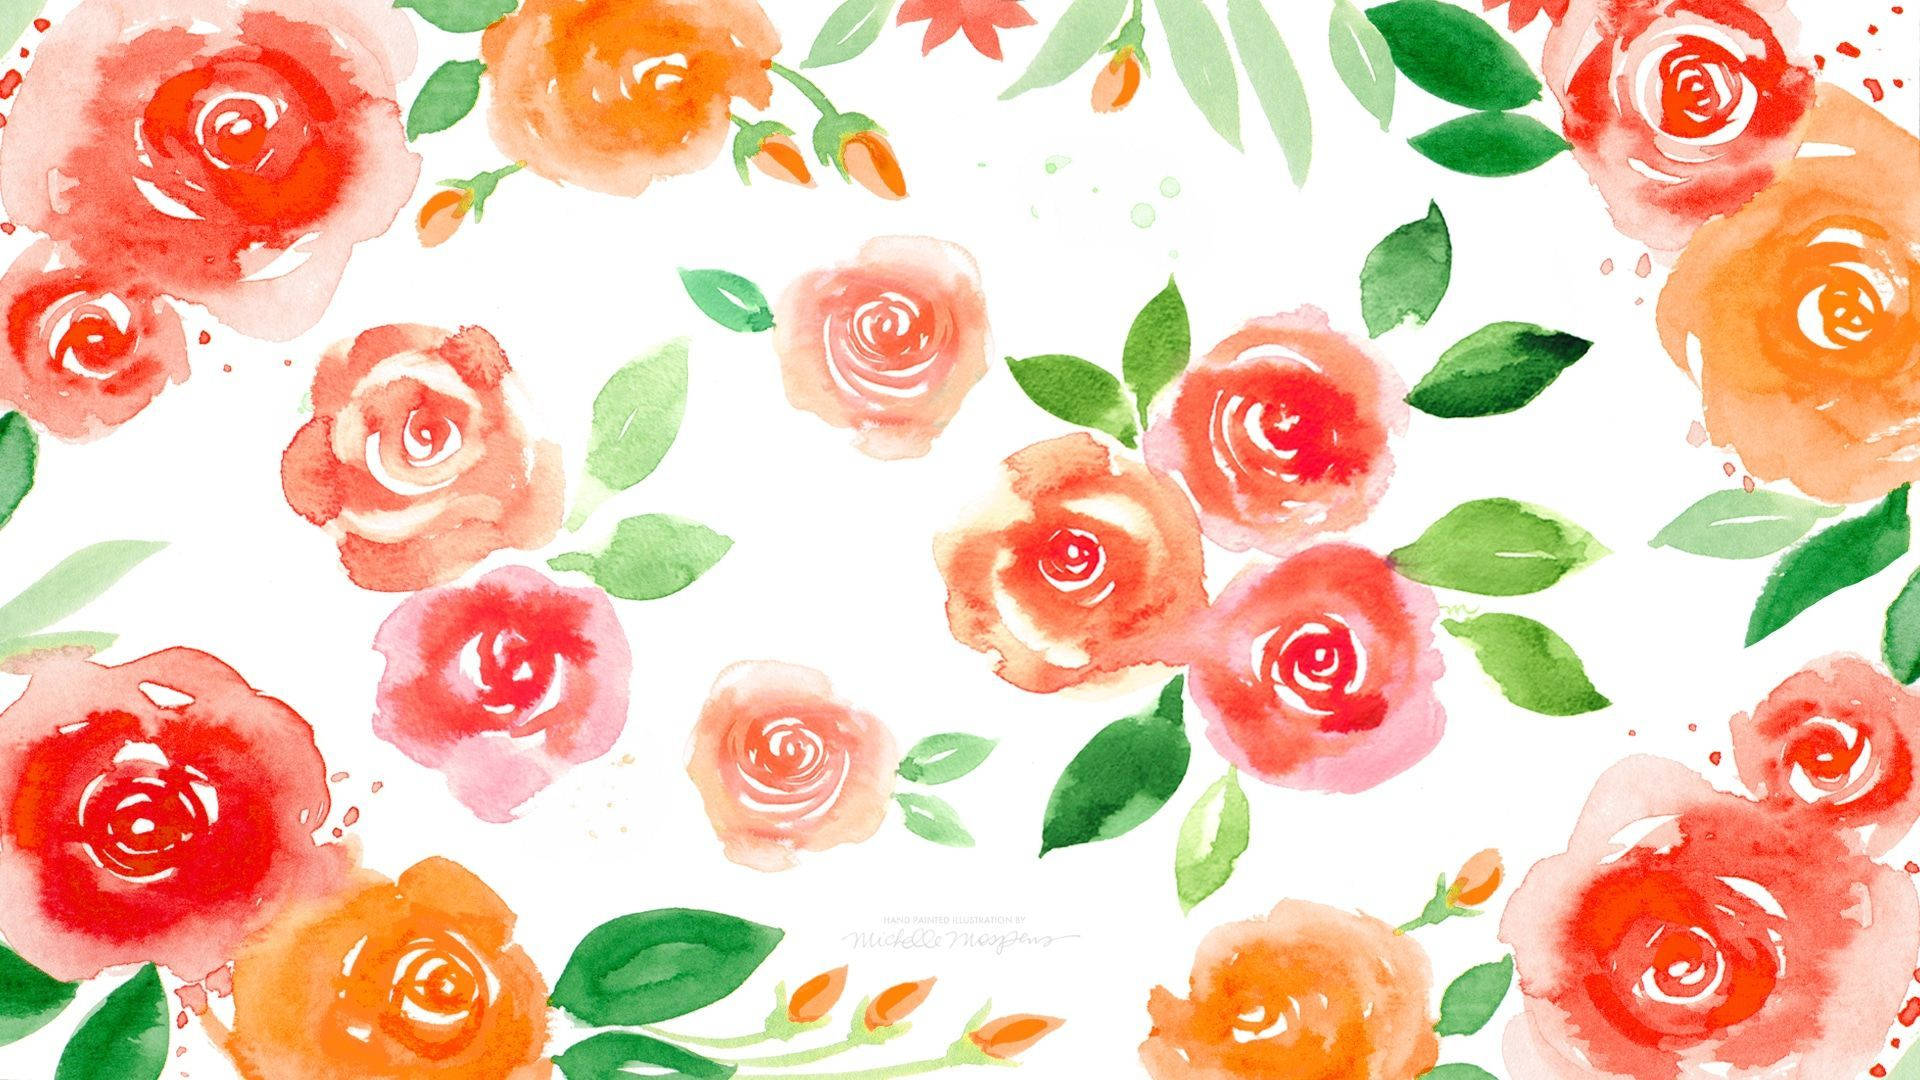 Warm Colors On Floral Desktop Painting Wallpaper